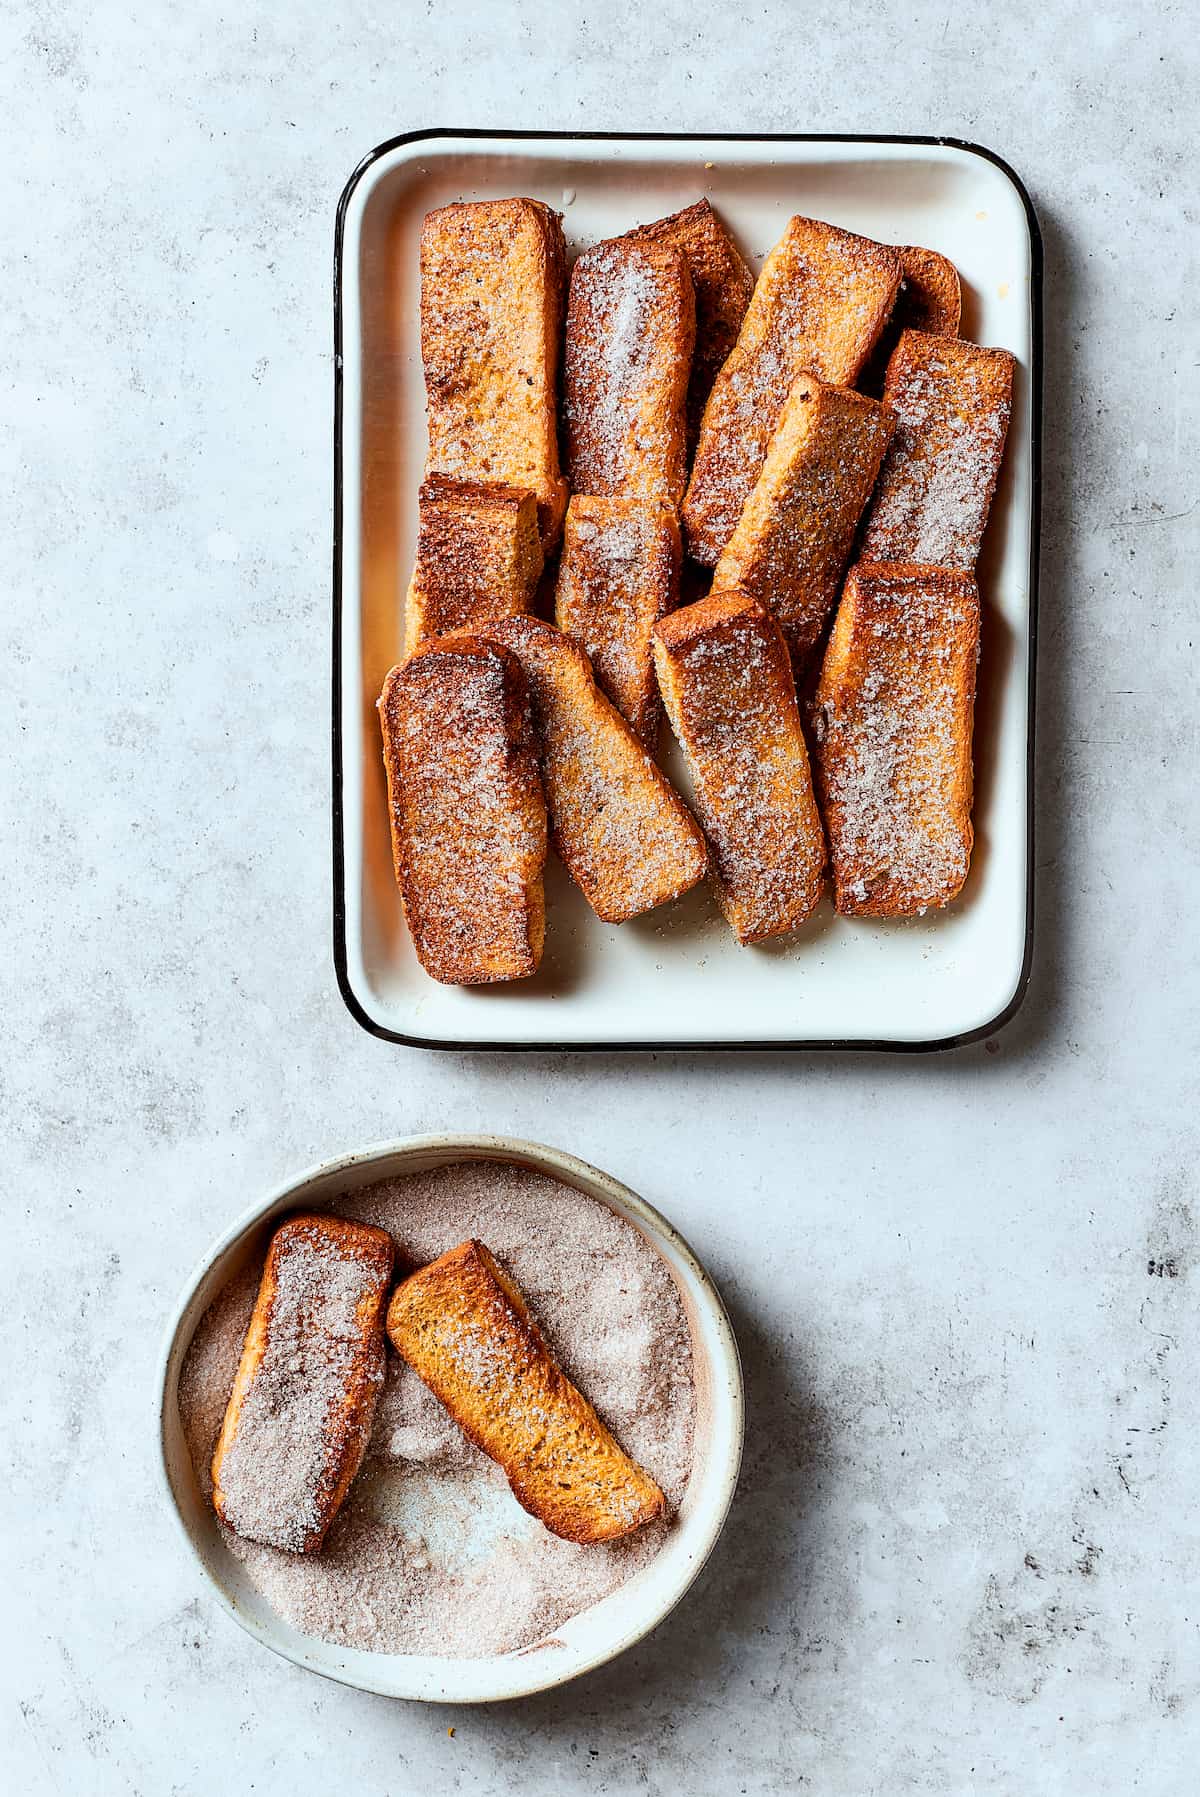 Rolling French toast sticks in cinnamon sugar.